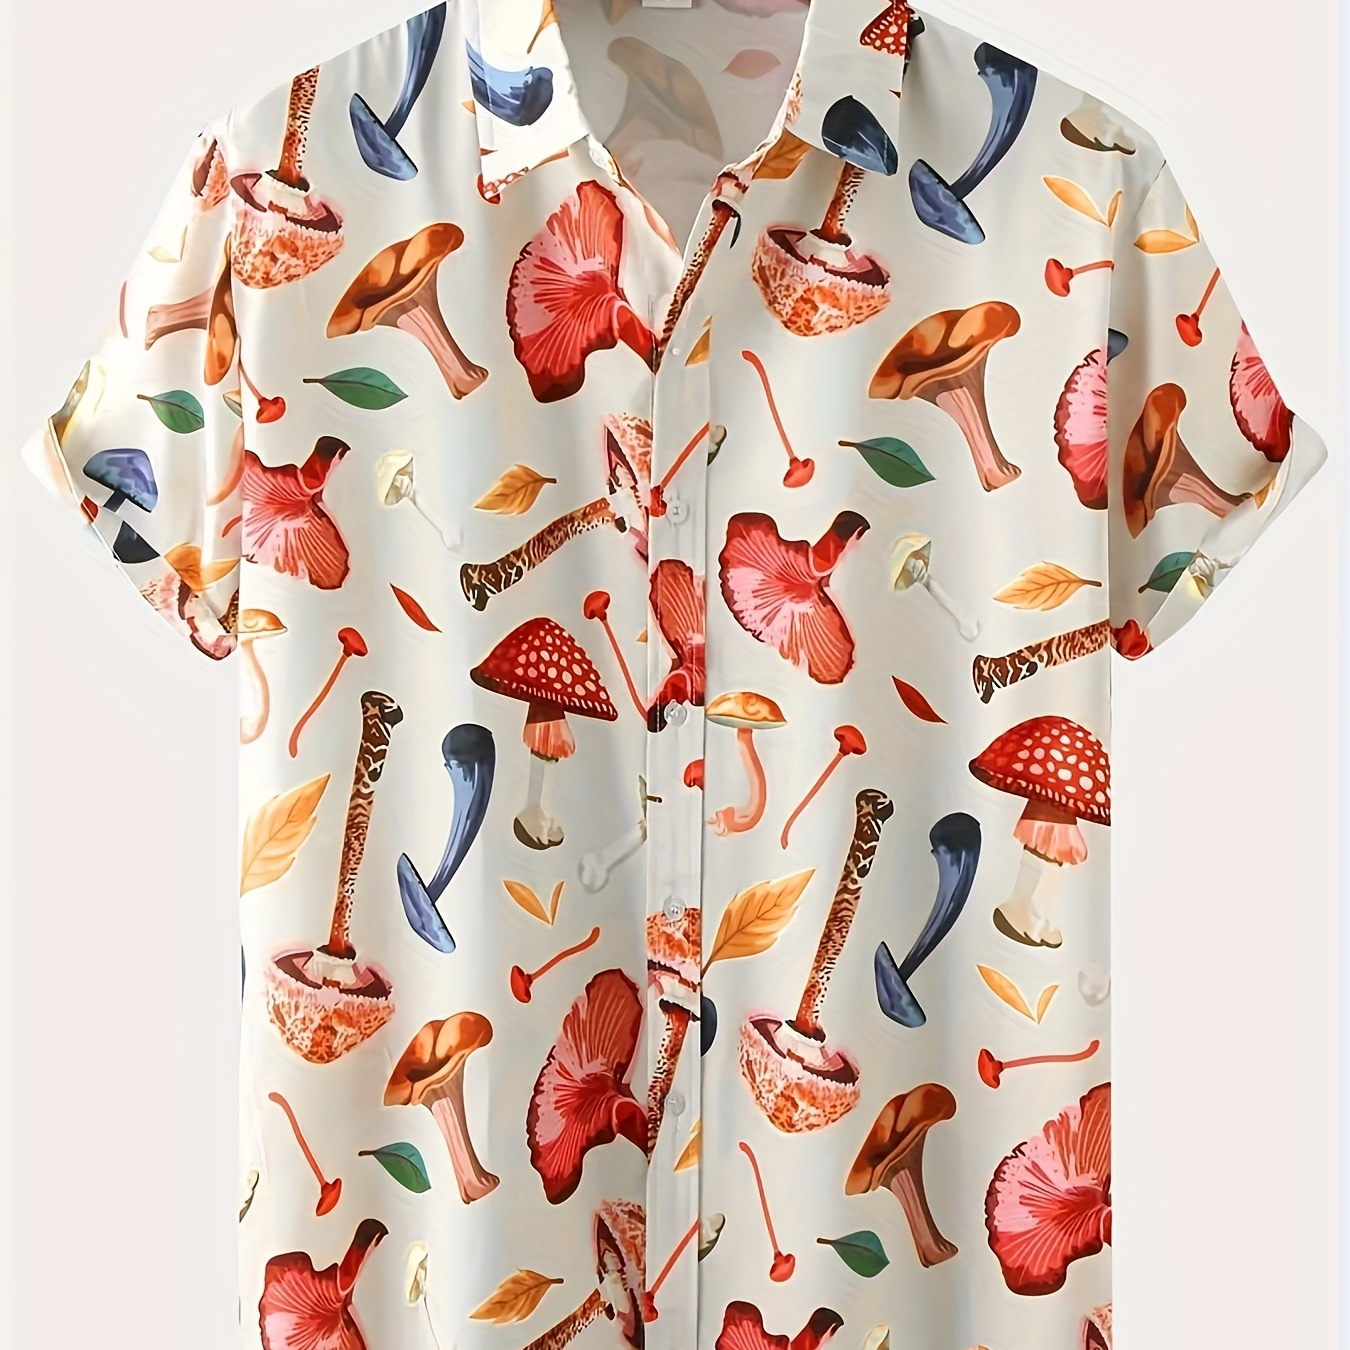 

Colorful Mushroom Full Print Men's Casual Short Sleeve Beach Hawaiian Shirt For Summer Holiday